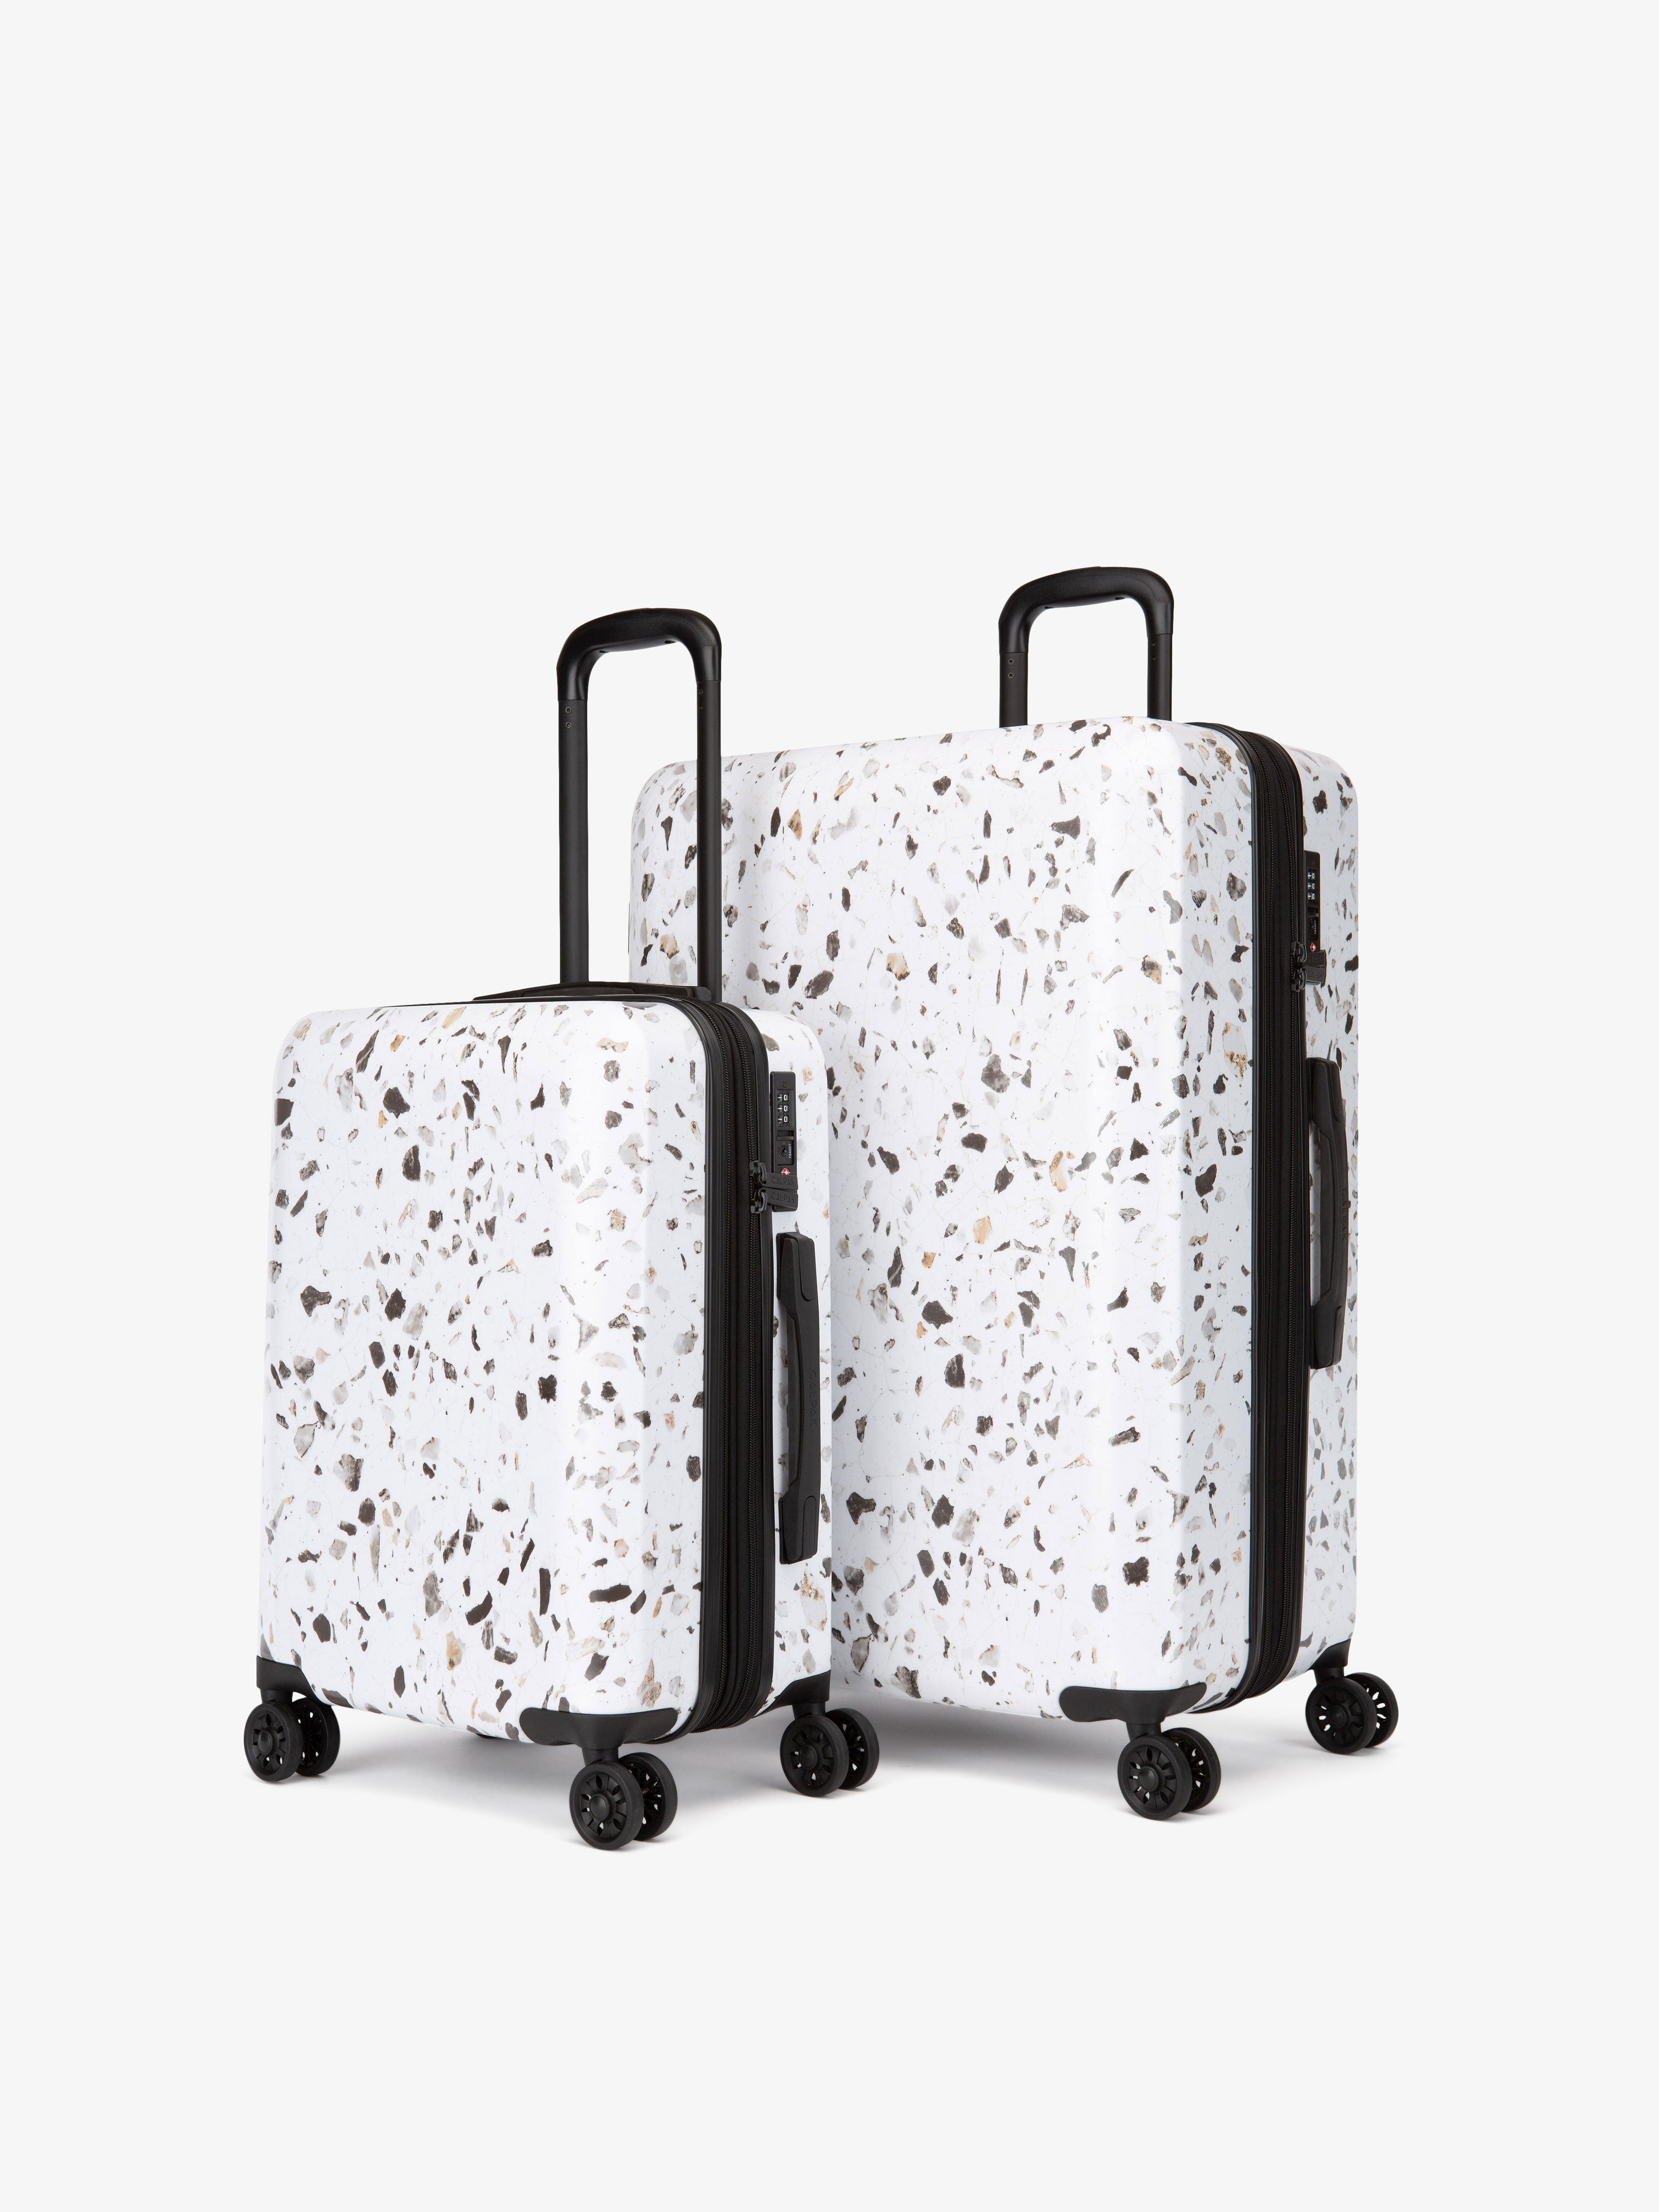 LARVENDER Luggage Sets 6 Piece, Expandable Hardshell Suitcase Set with  Spinner Wheels, Lightweight Travel Luggage Set TSA-Approved Lock with 2  Travel